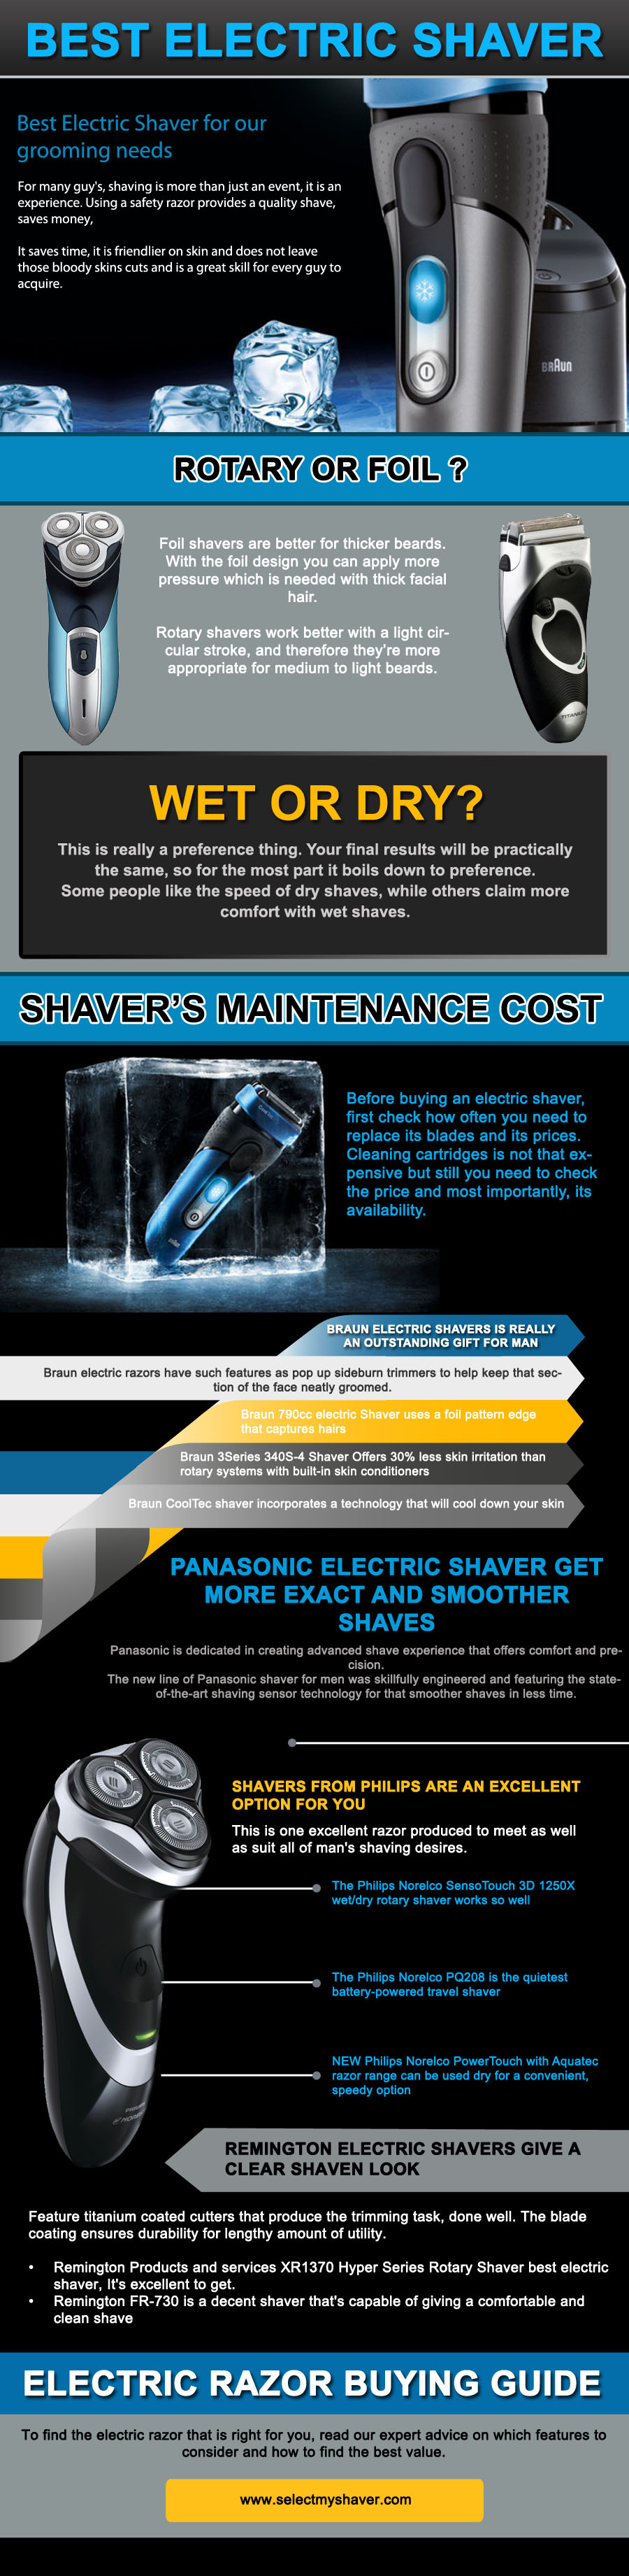 Electric Shaver.jpg